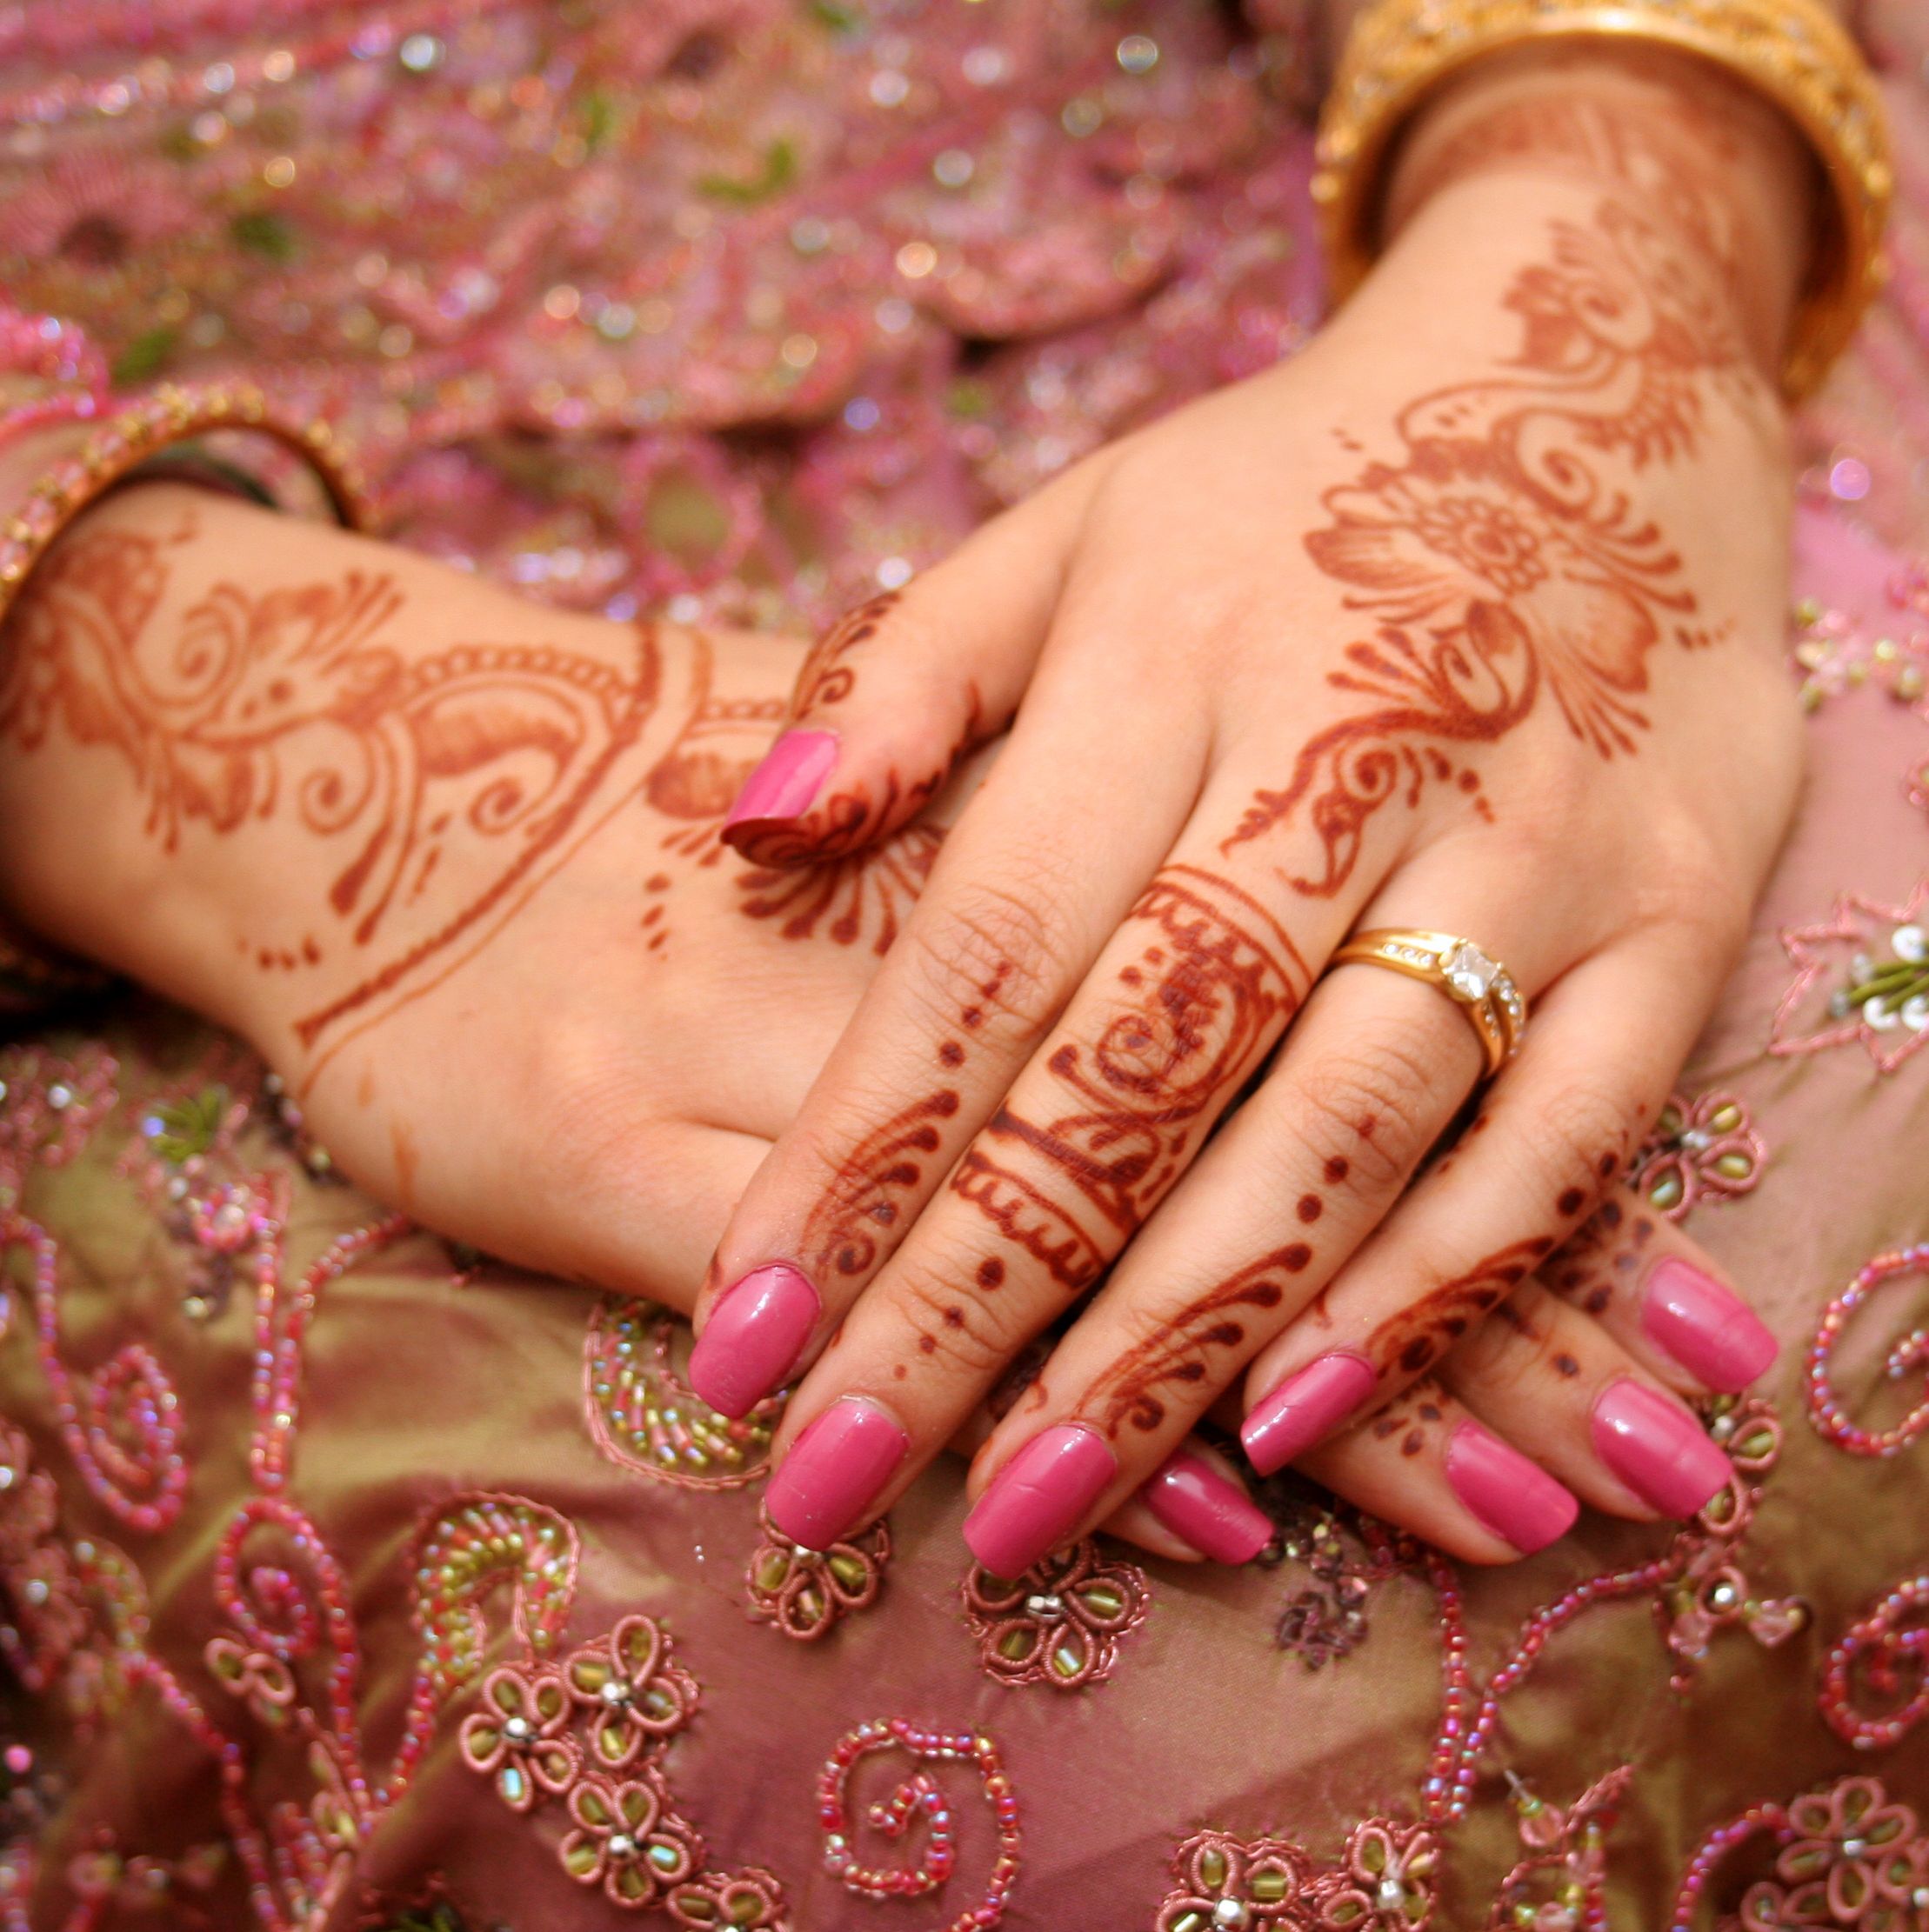 henna hand tattoos for girls